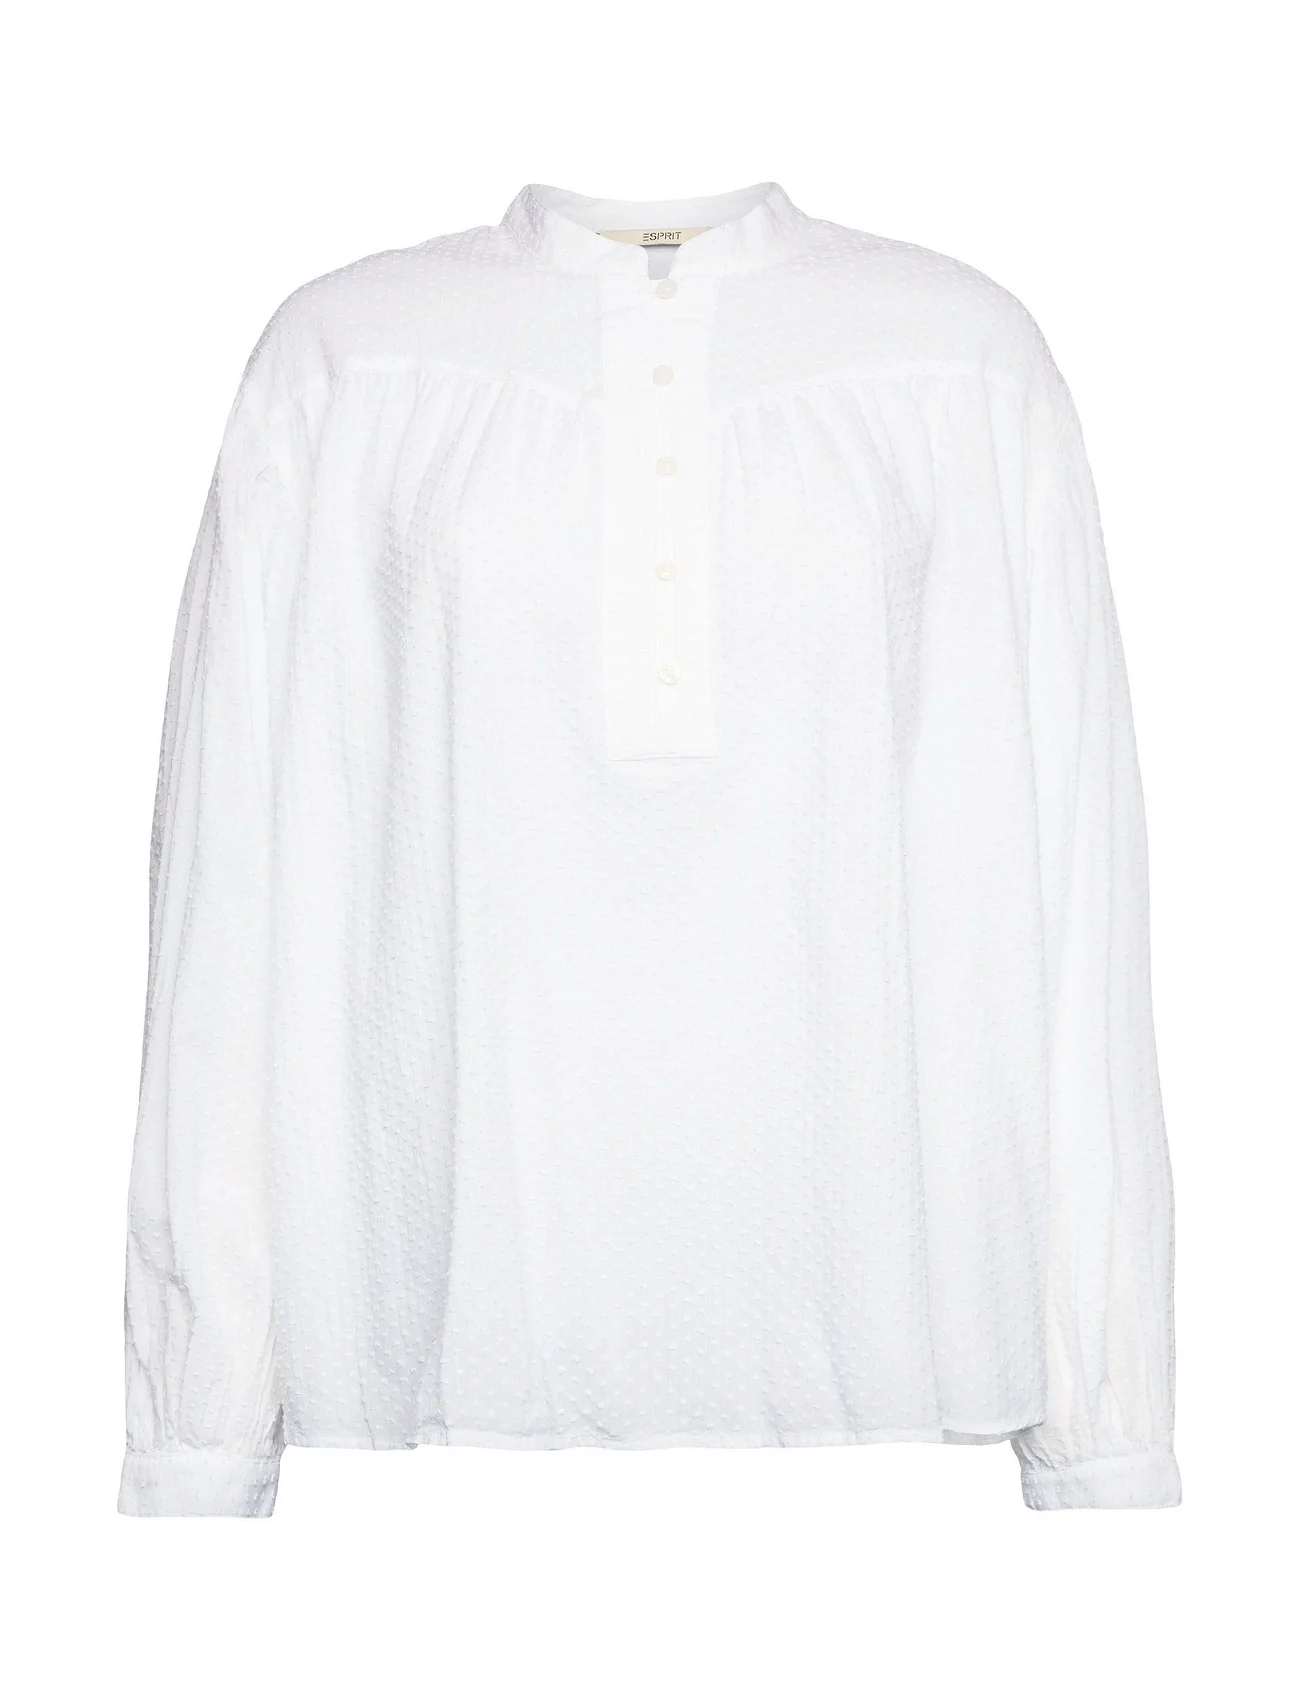 Esprit Casual - Dobby texture blouse - langærmede bluser - white - 0